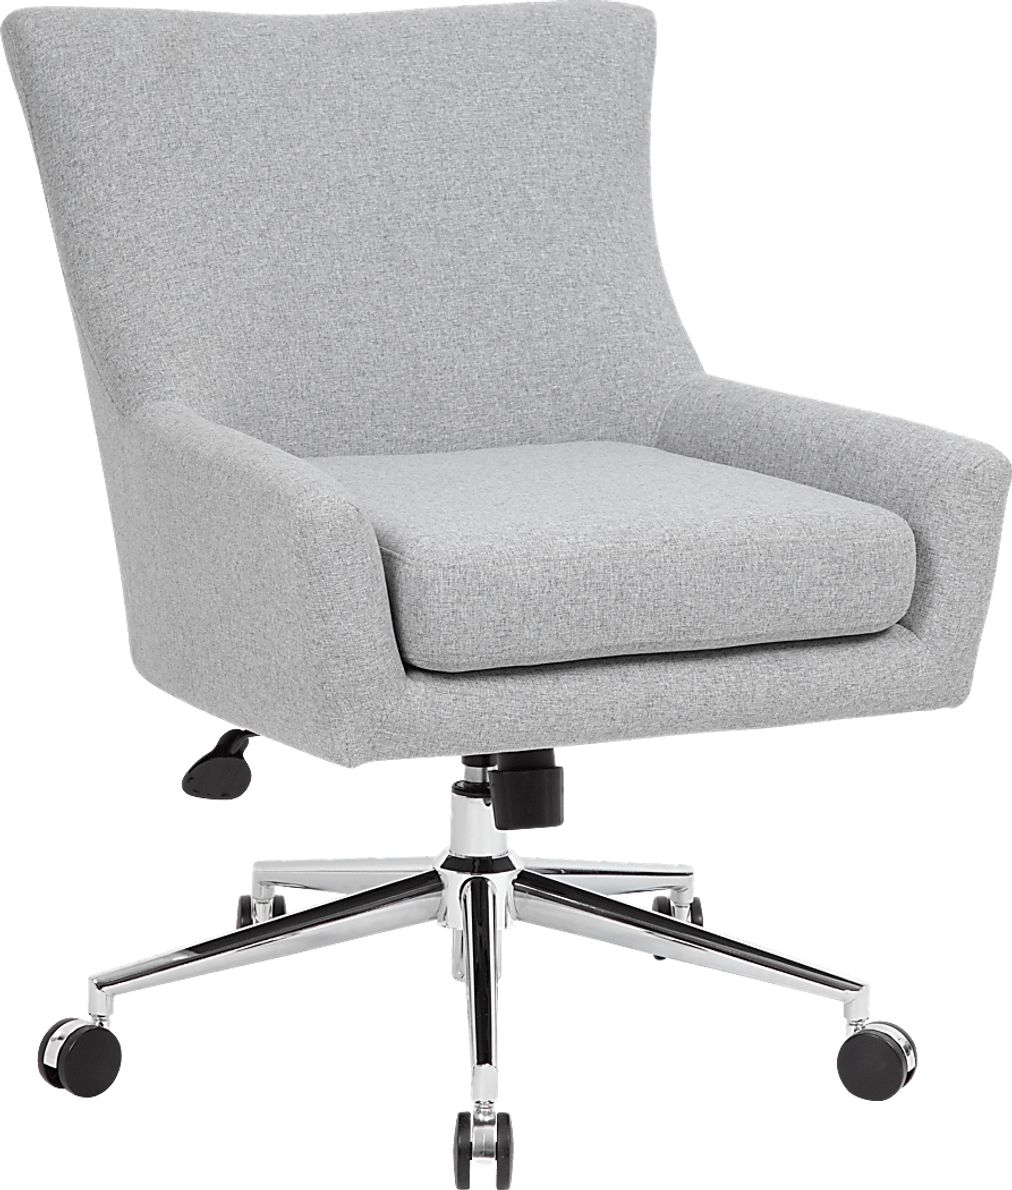 Apsley Gray Desk Chair